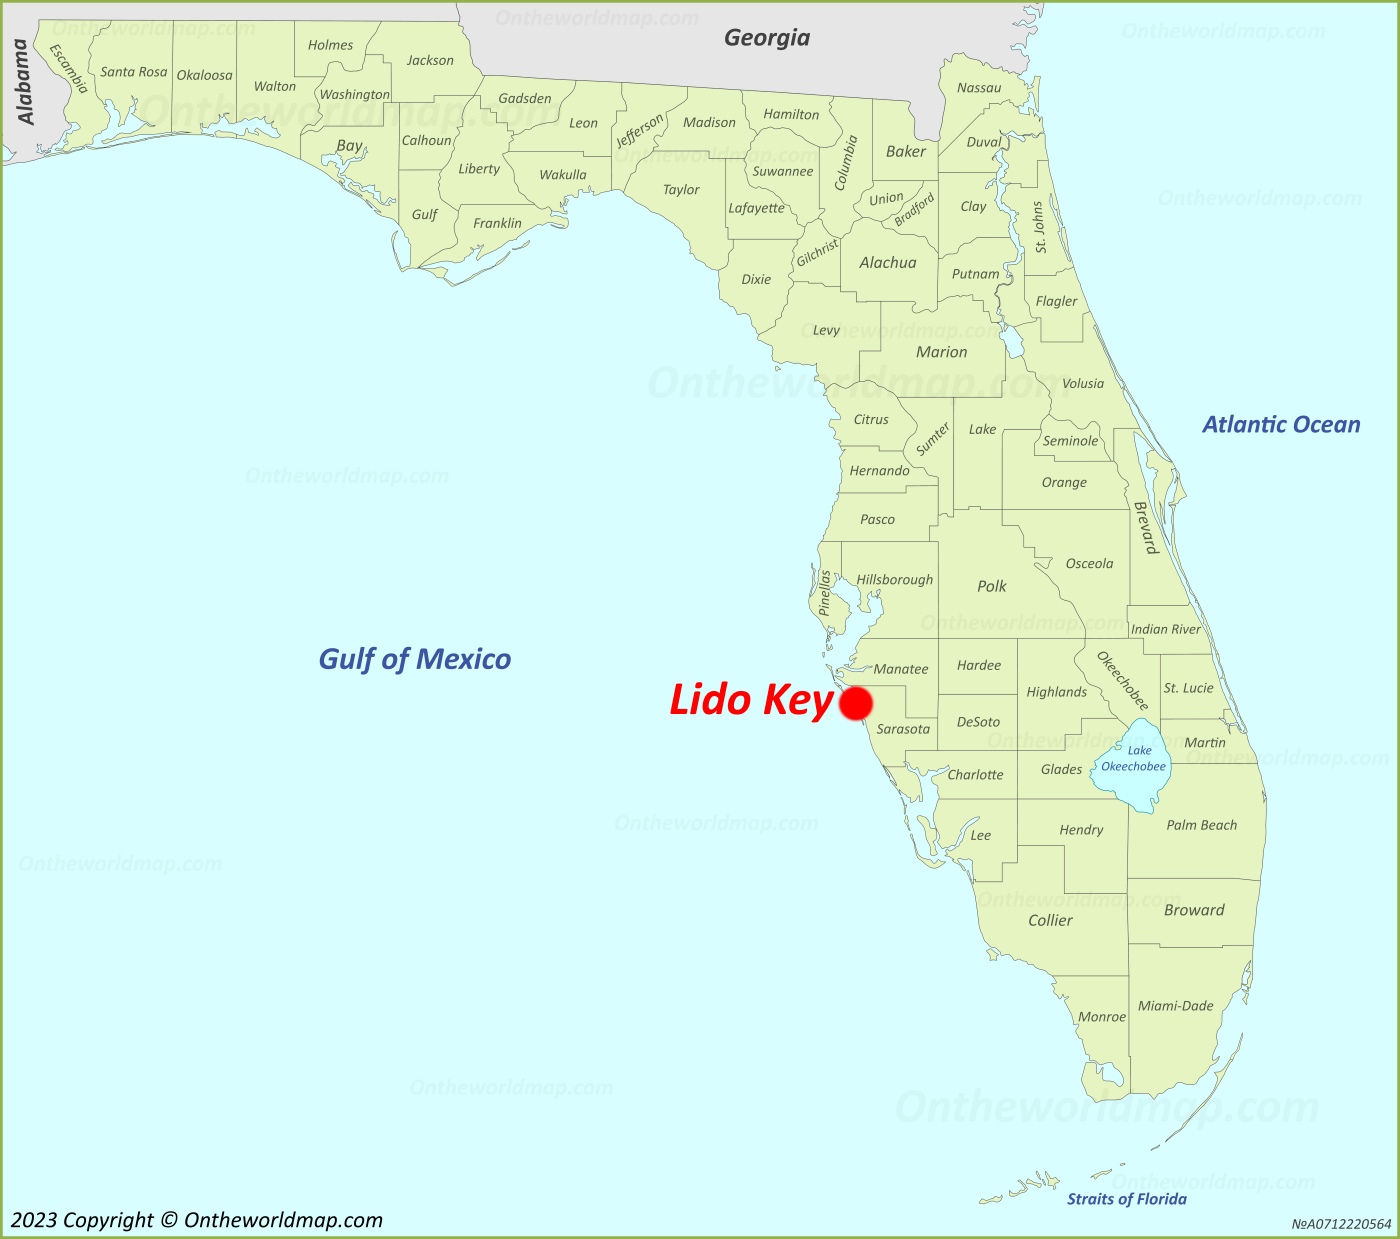 Lido Key Location On The Florida Map